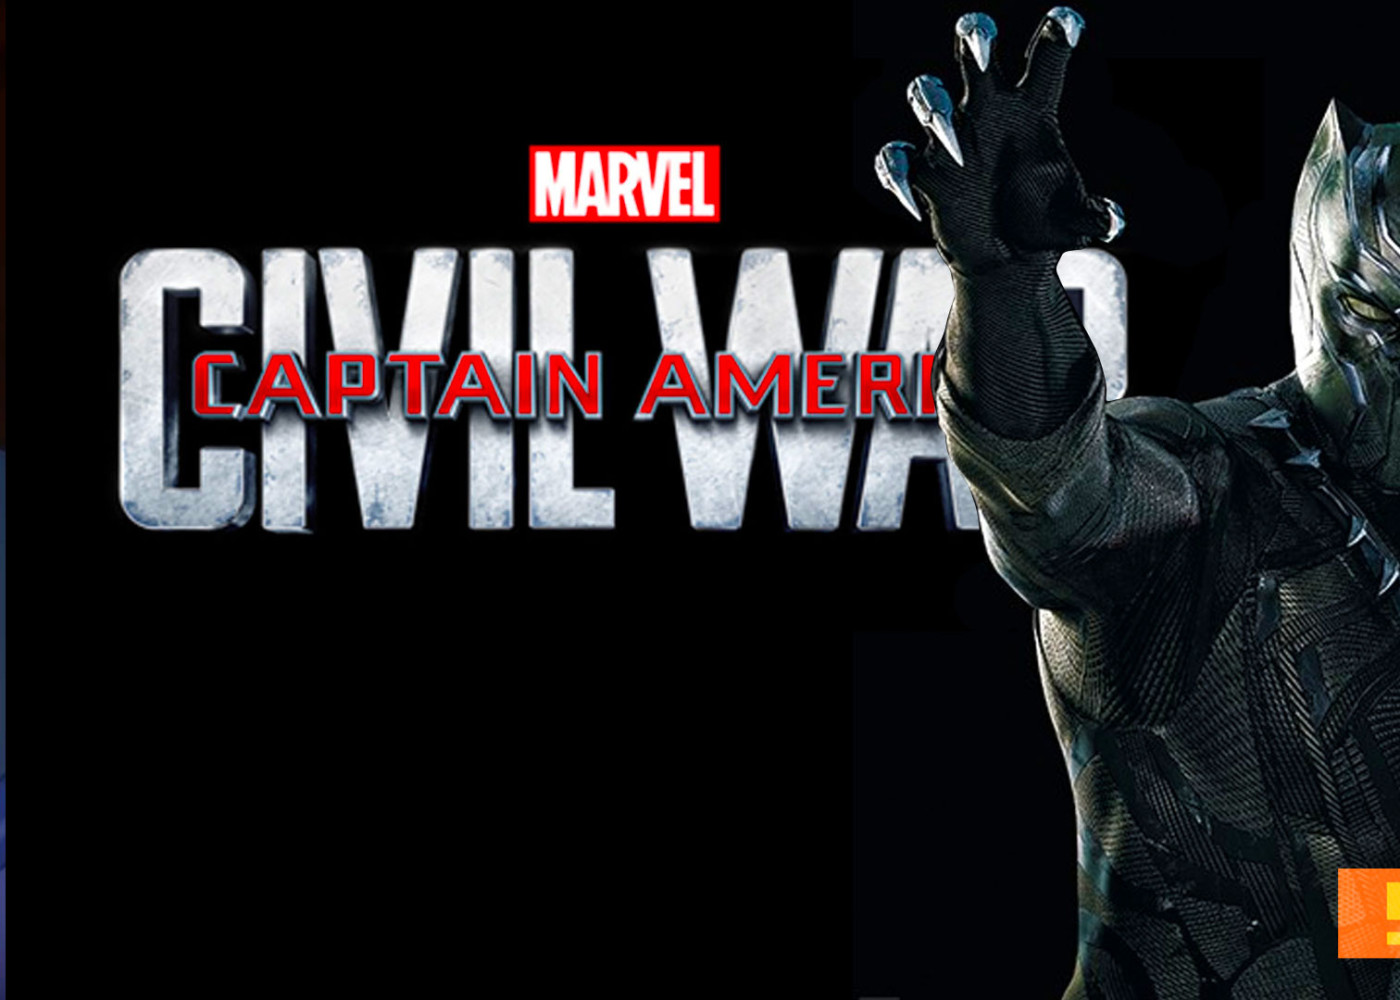 New Captain America Civil War Images Reveal More Of Black